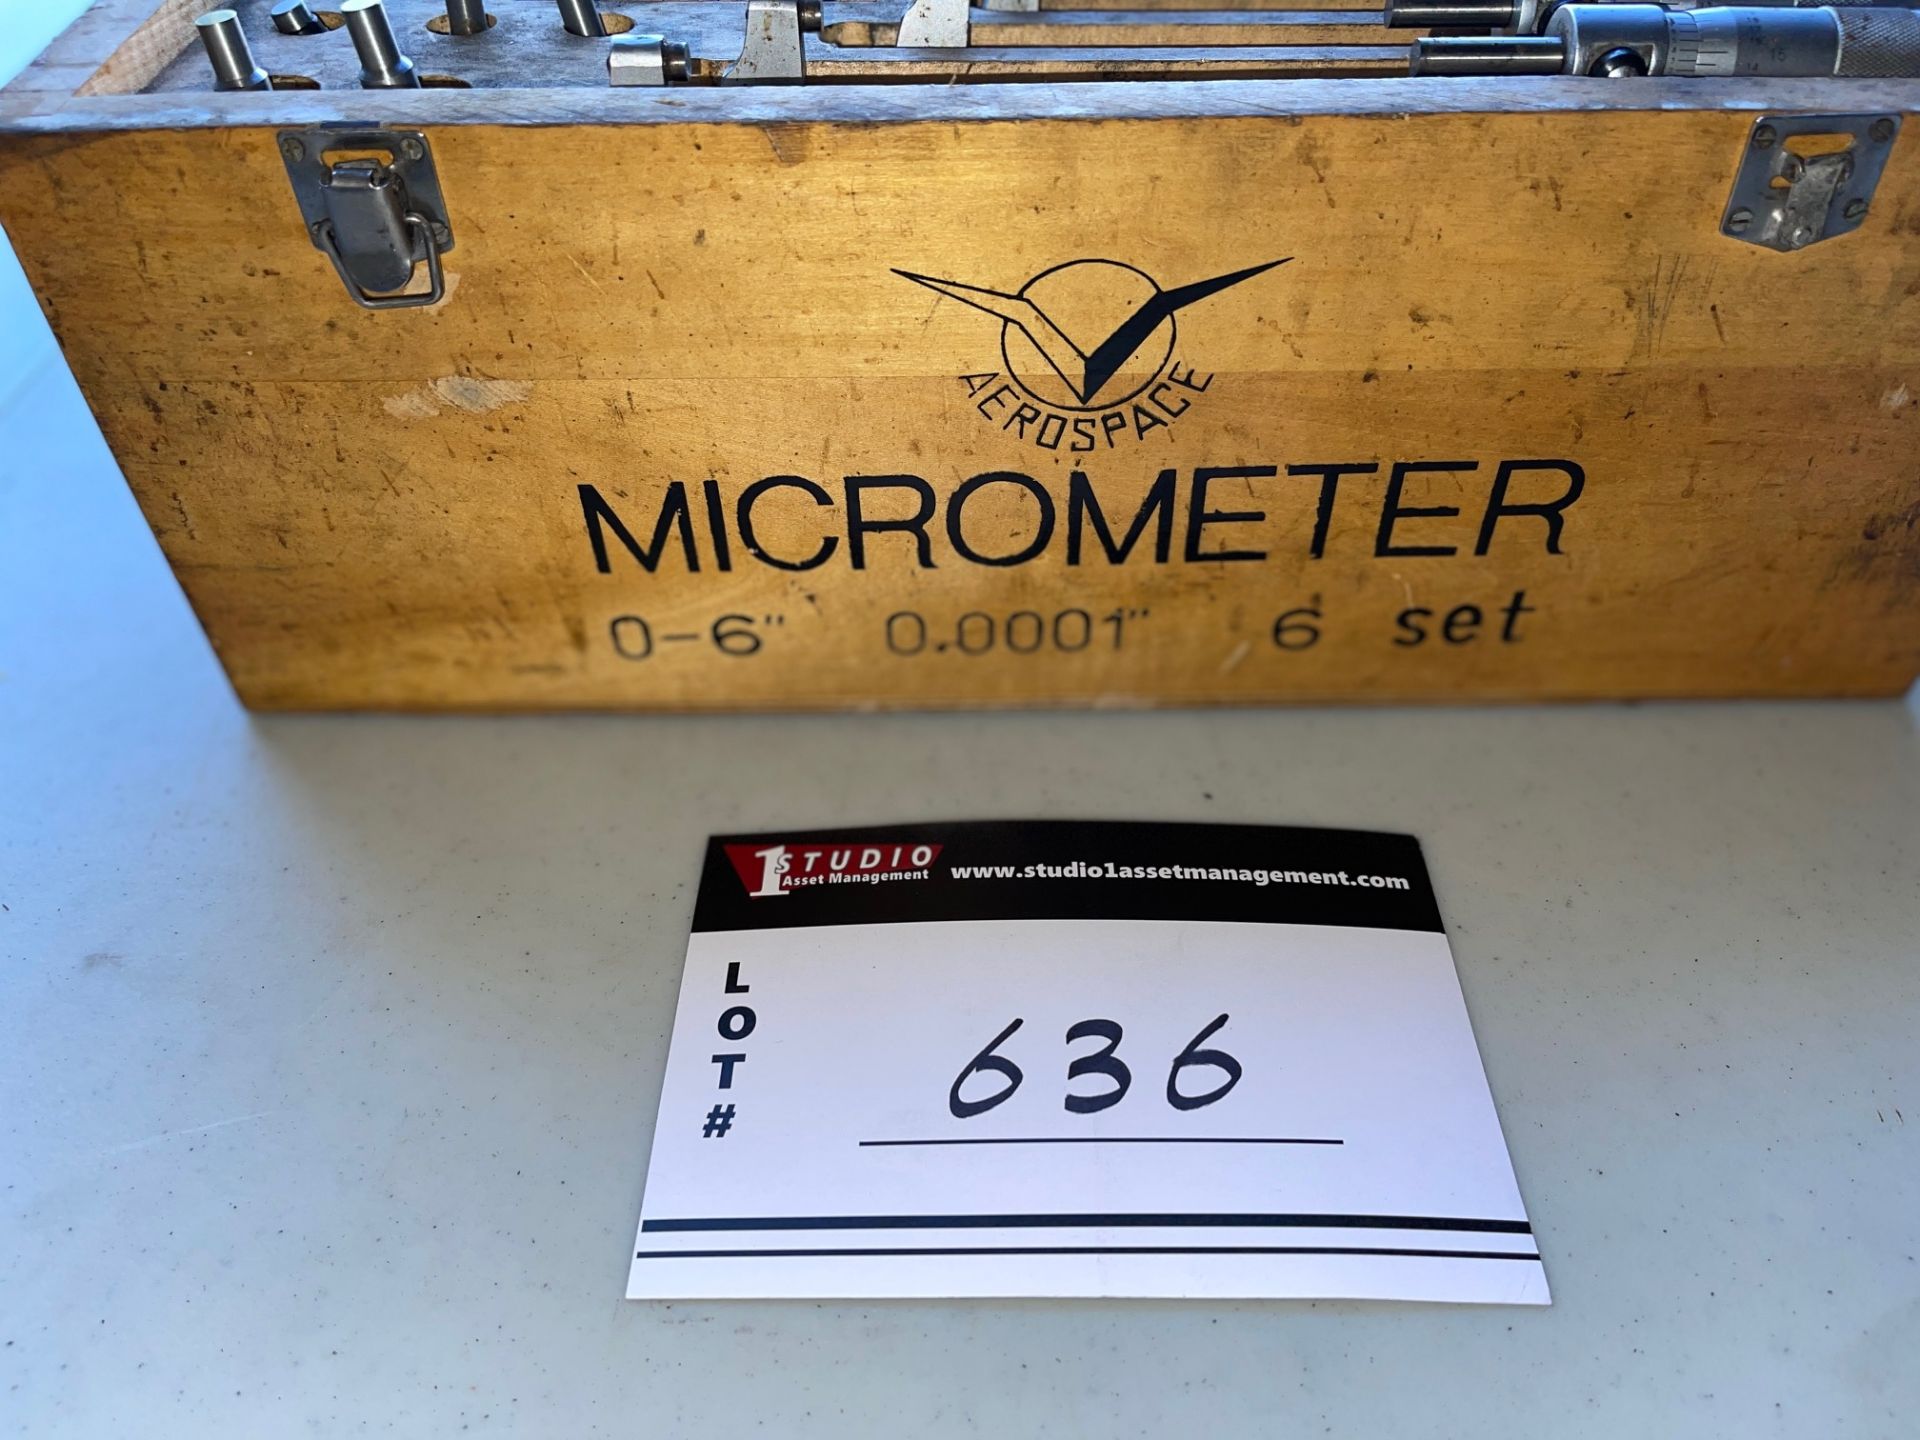 AEROSPACE MICROMETRE SET, 0-6”, 0.0001”, 6 SET